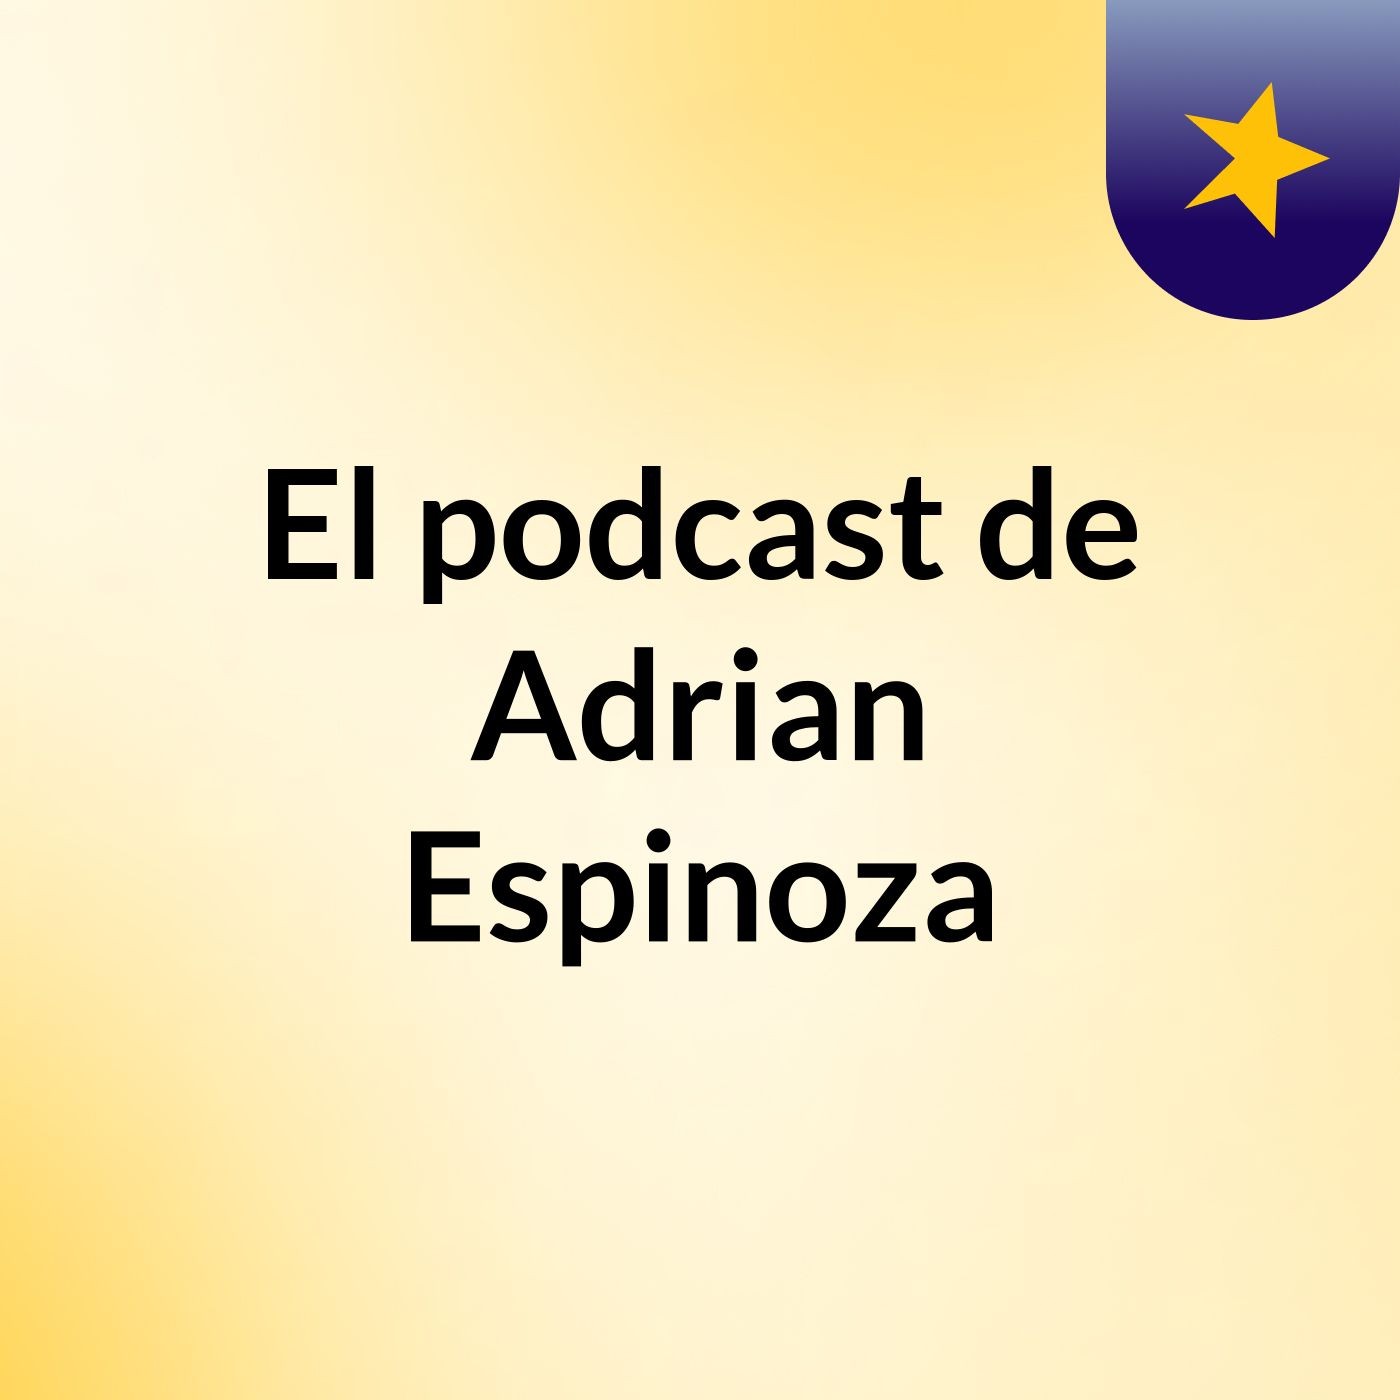 El podcast de Adrian Espinoza